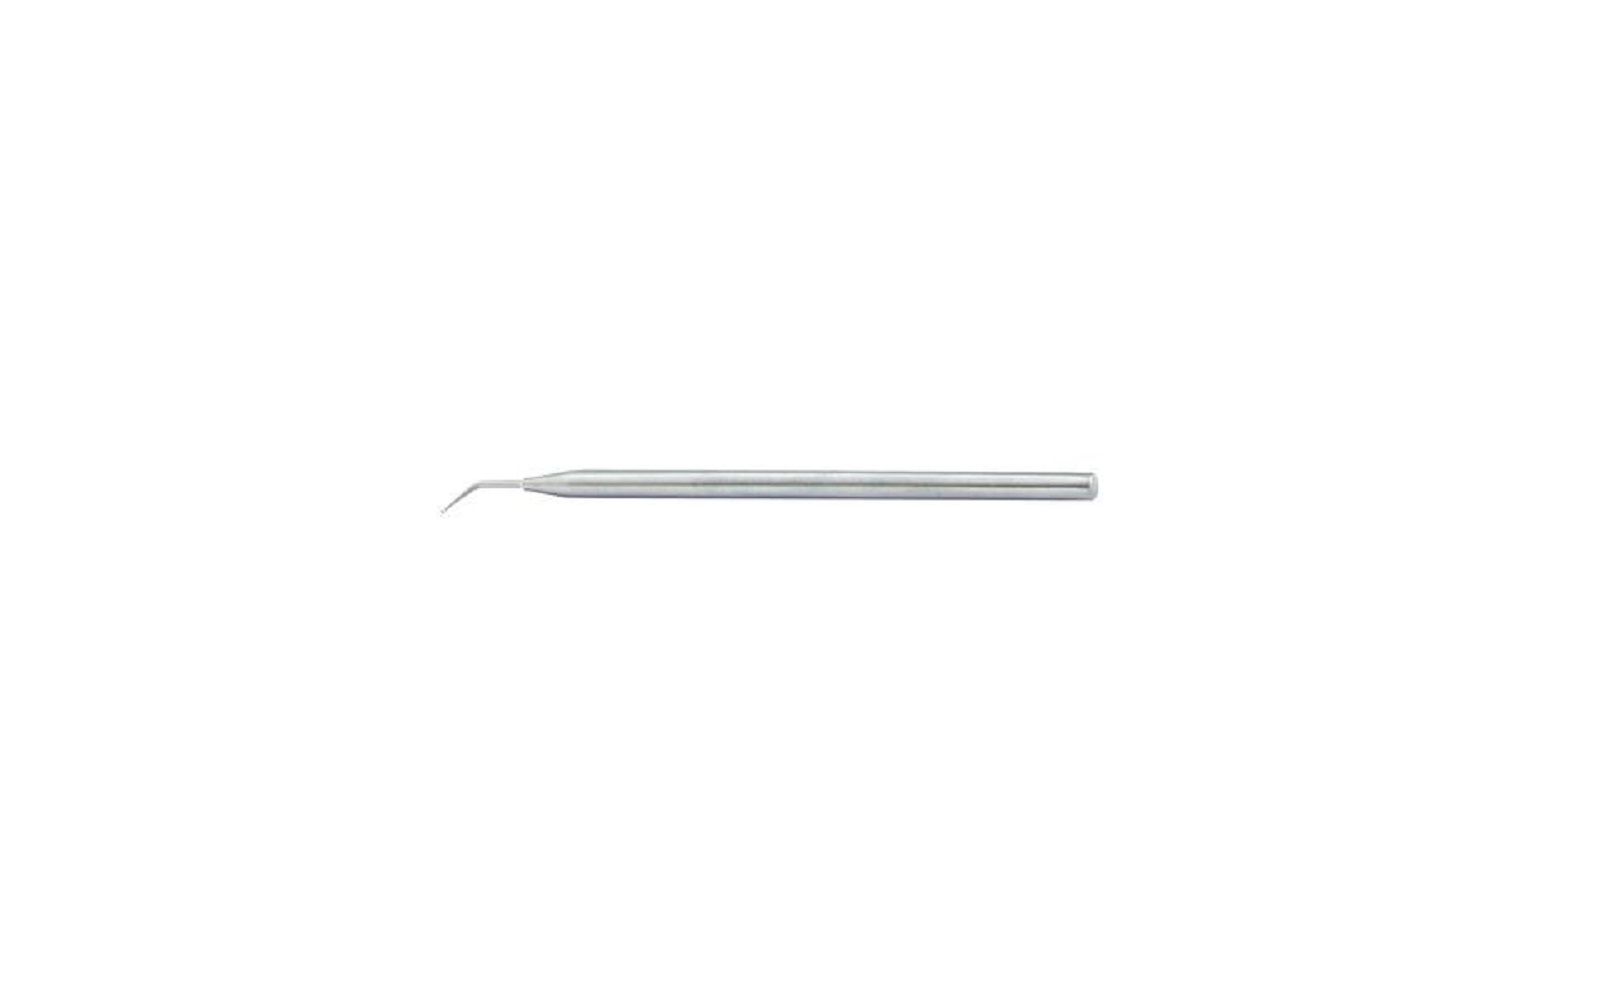 Patterson® cavity liner placement instrument – 02-540, single end